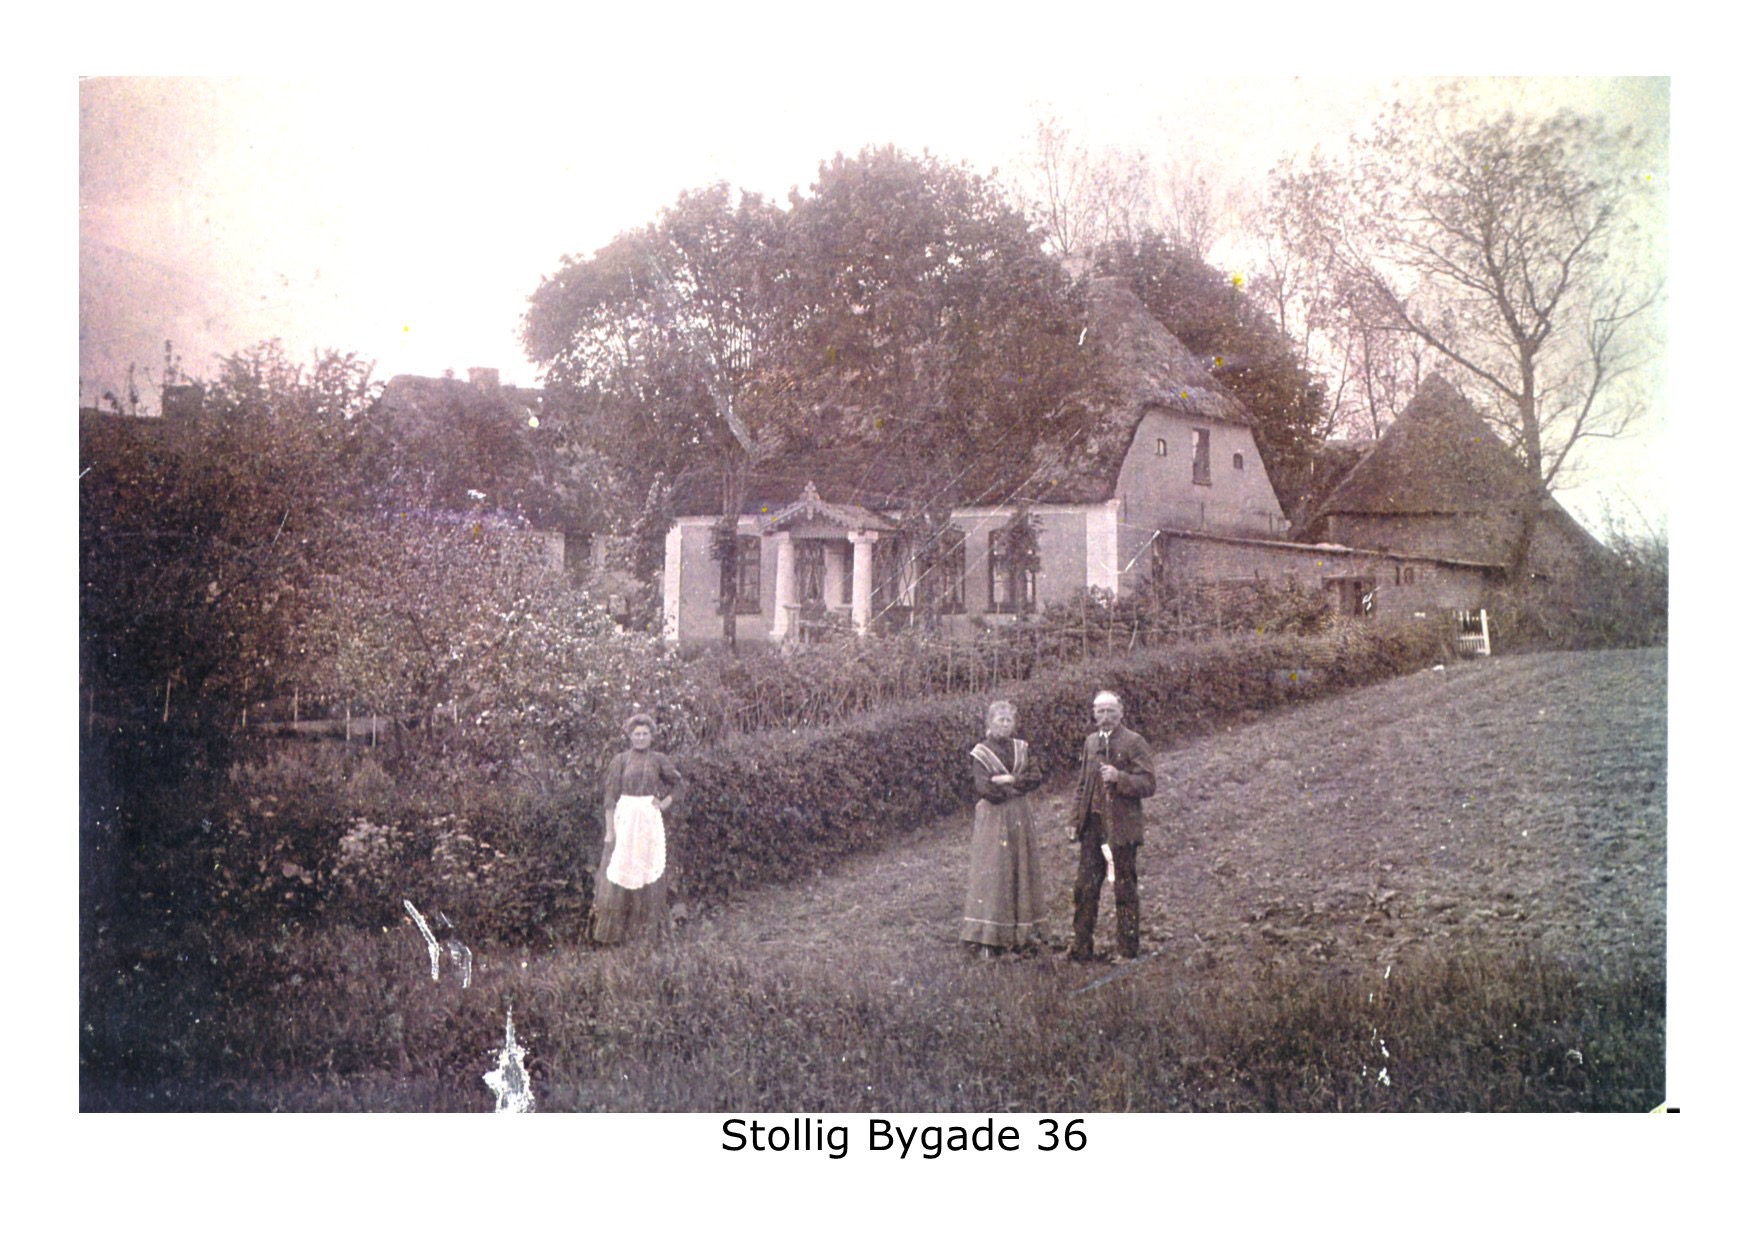 Stollig Bygade 36 